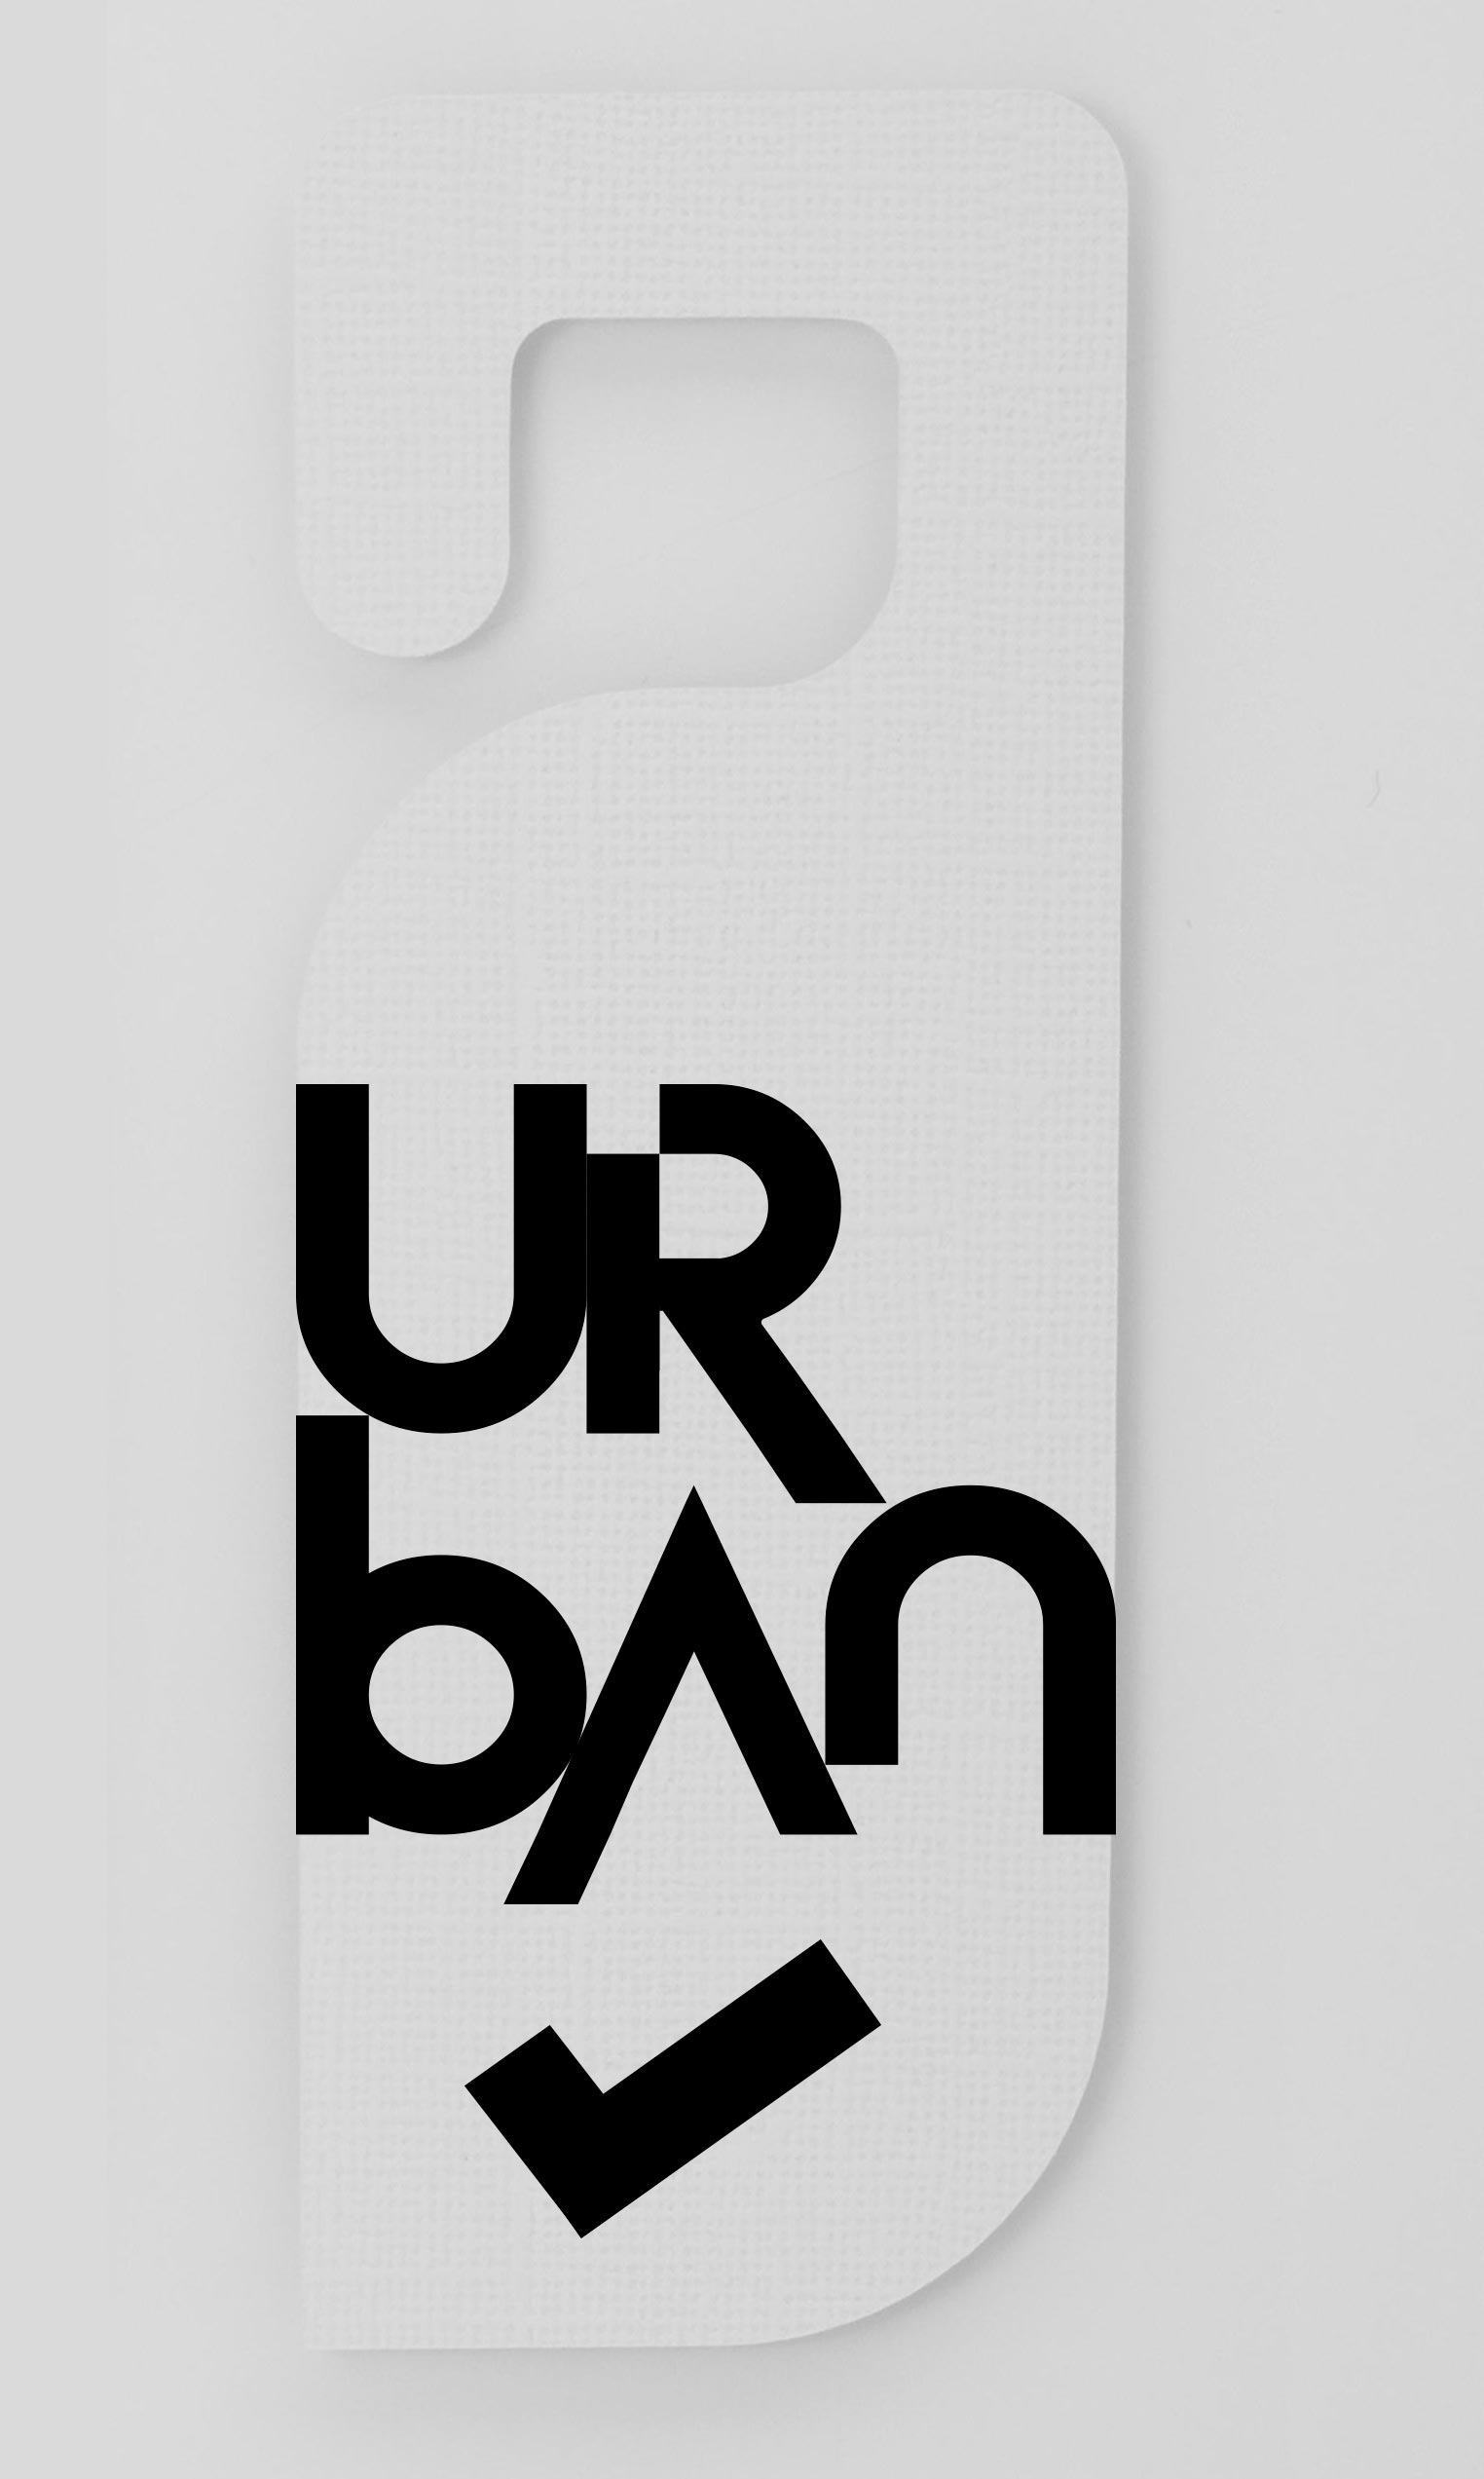 Urban by Ubu hotels & resorts